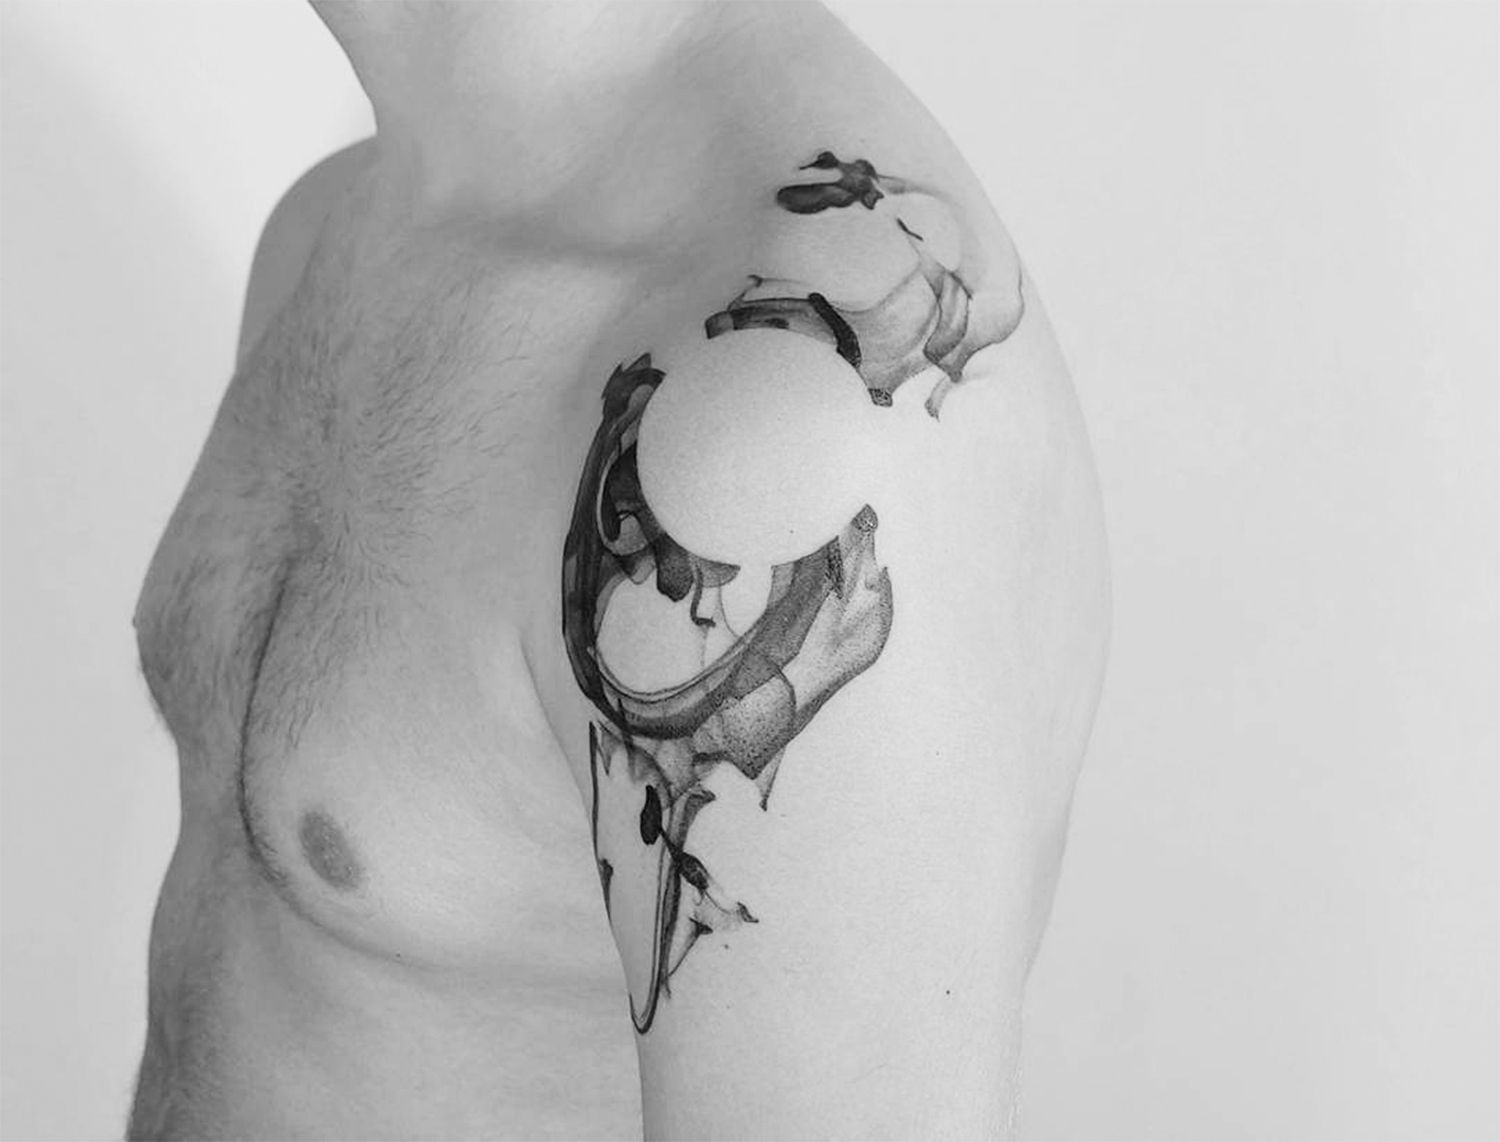 paintbrush style tattoo, negative space circle on shoulder by Roman Melnikov